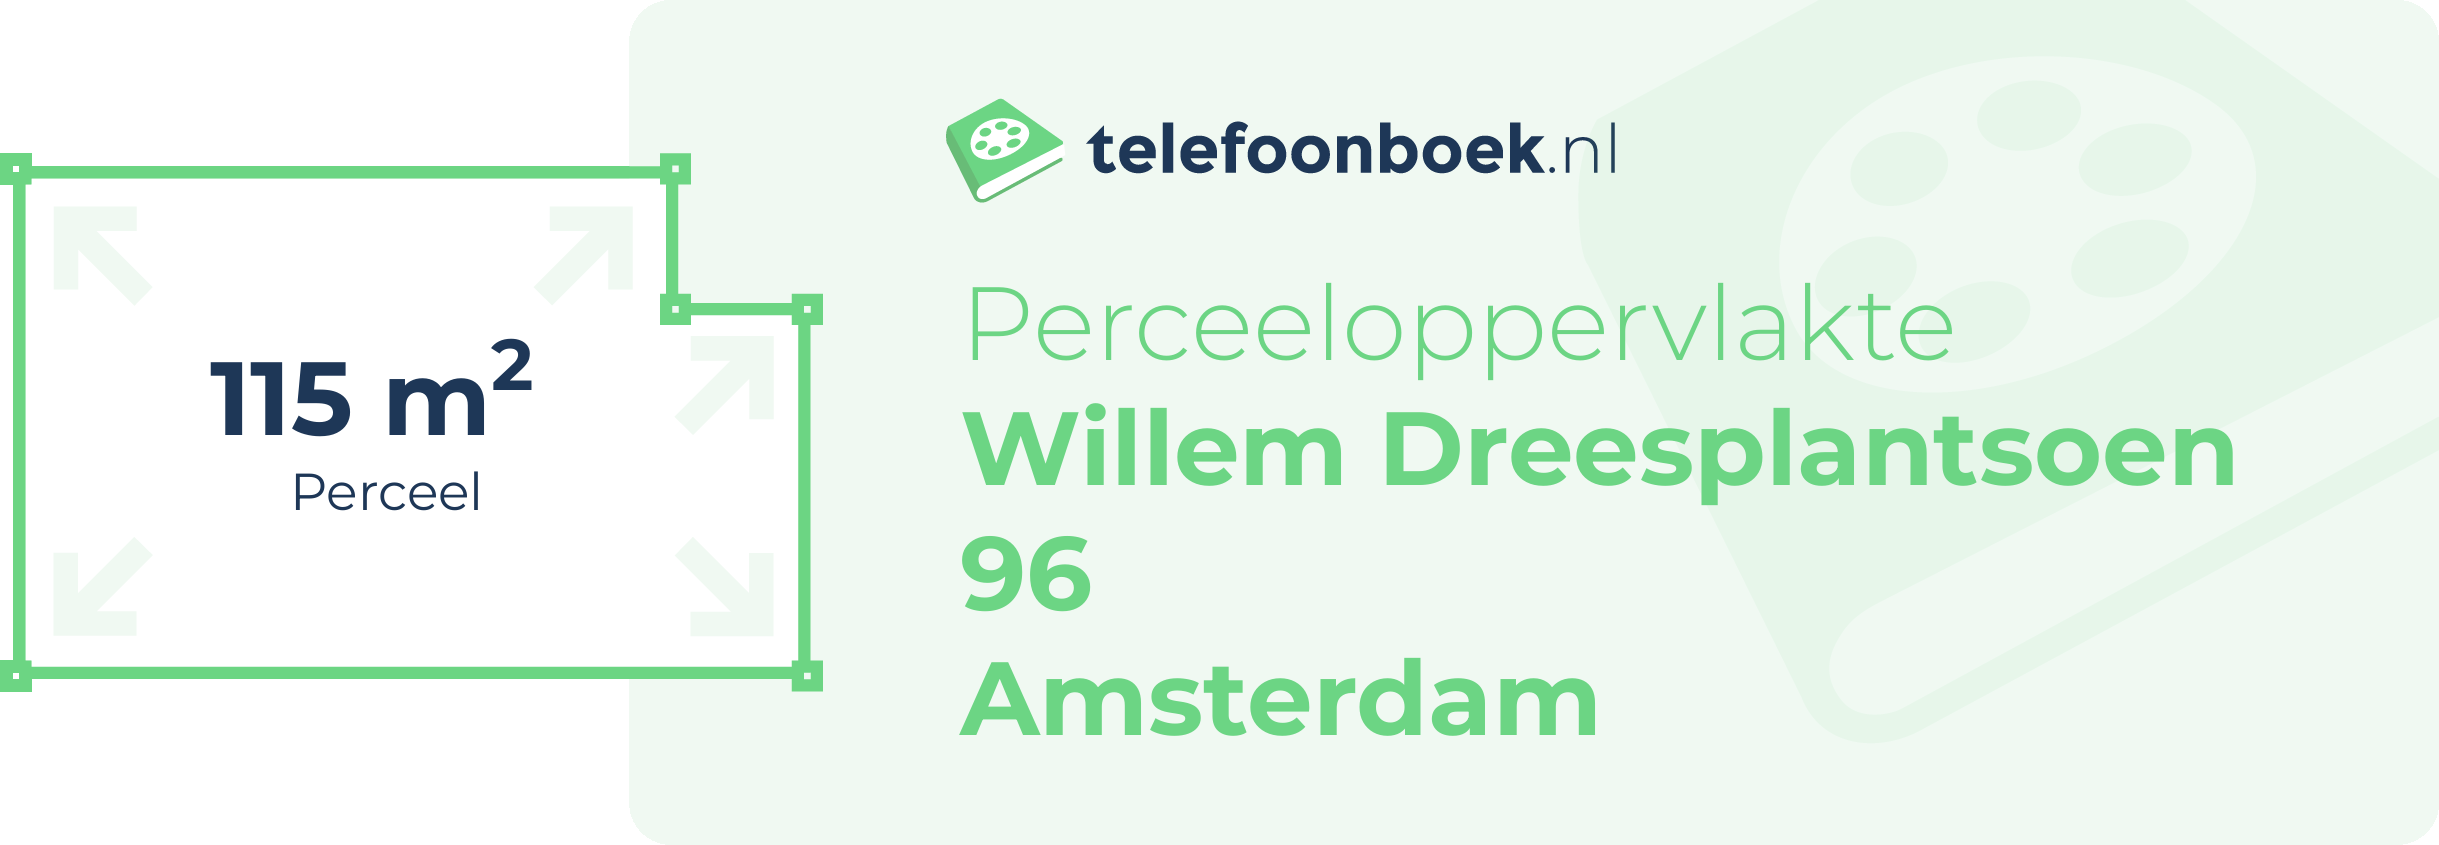 Perceeloppervlakte Willem Dreesplantsoen 96 Amsterdam